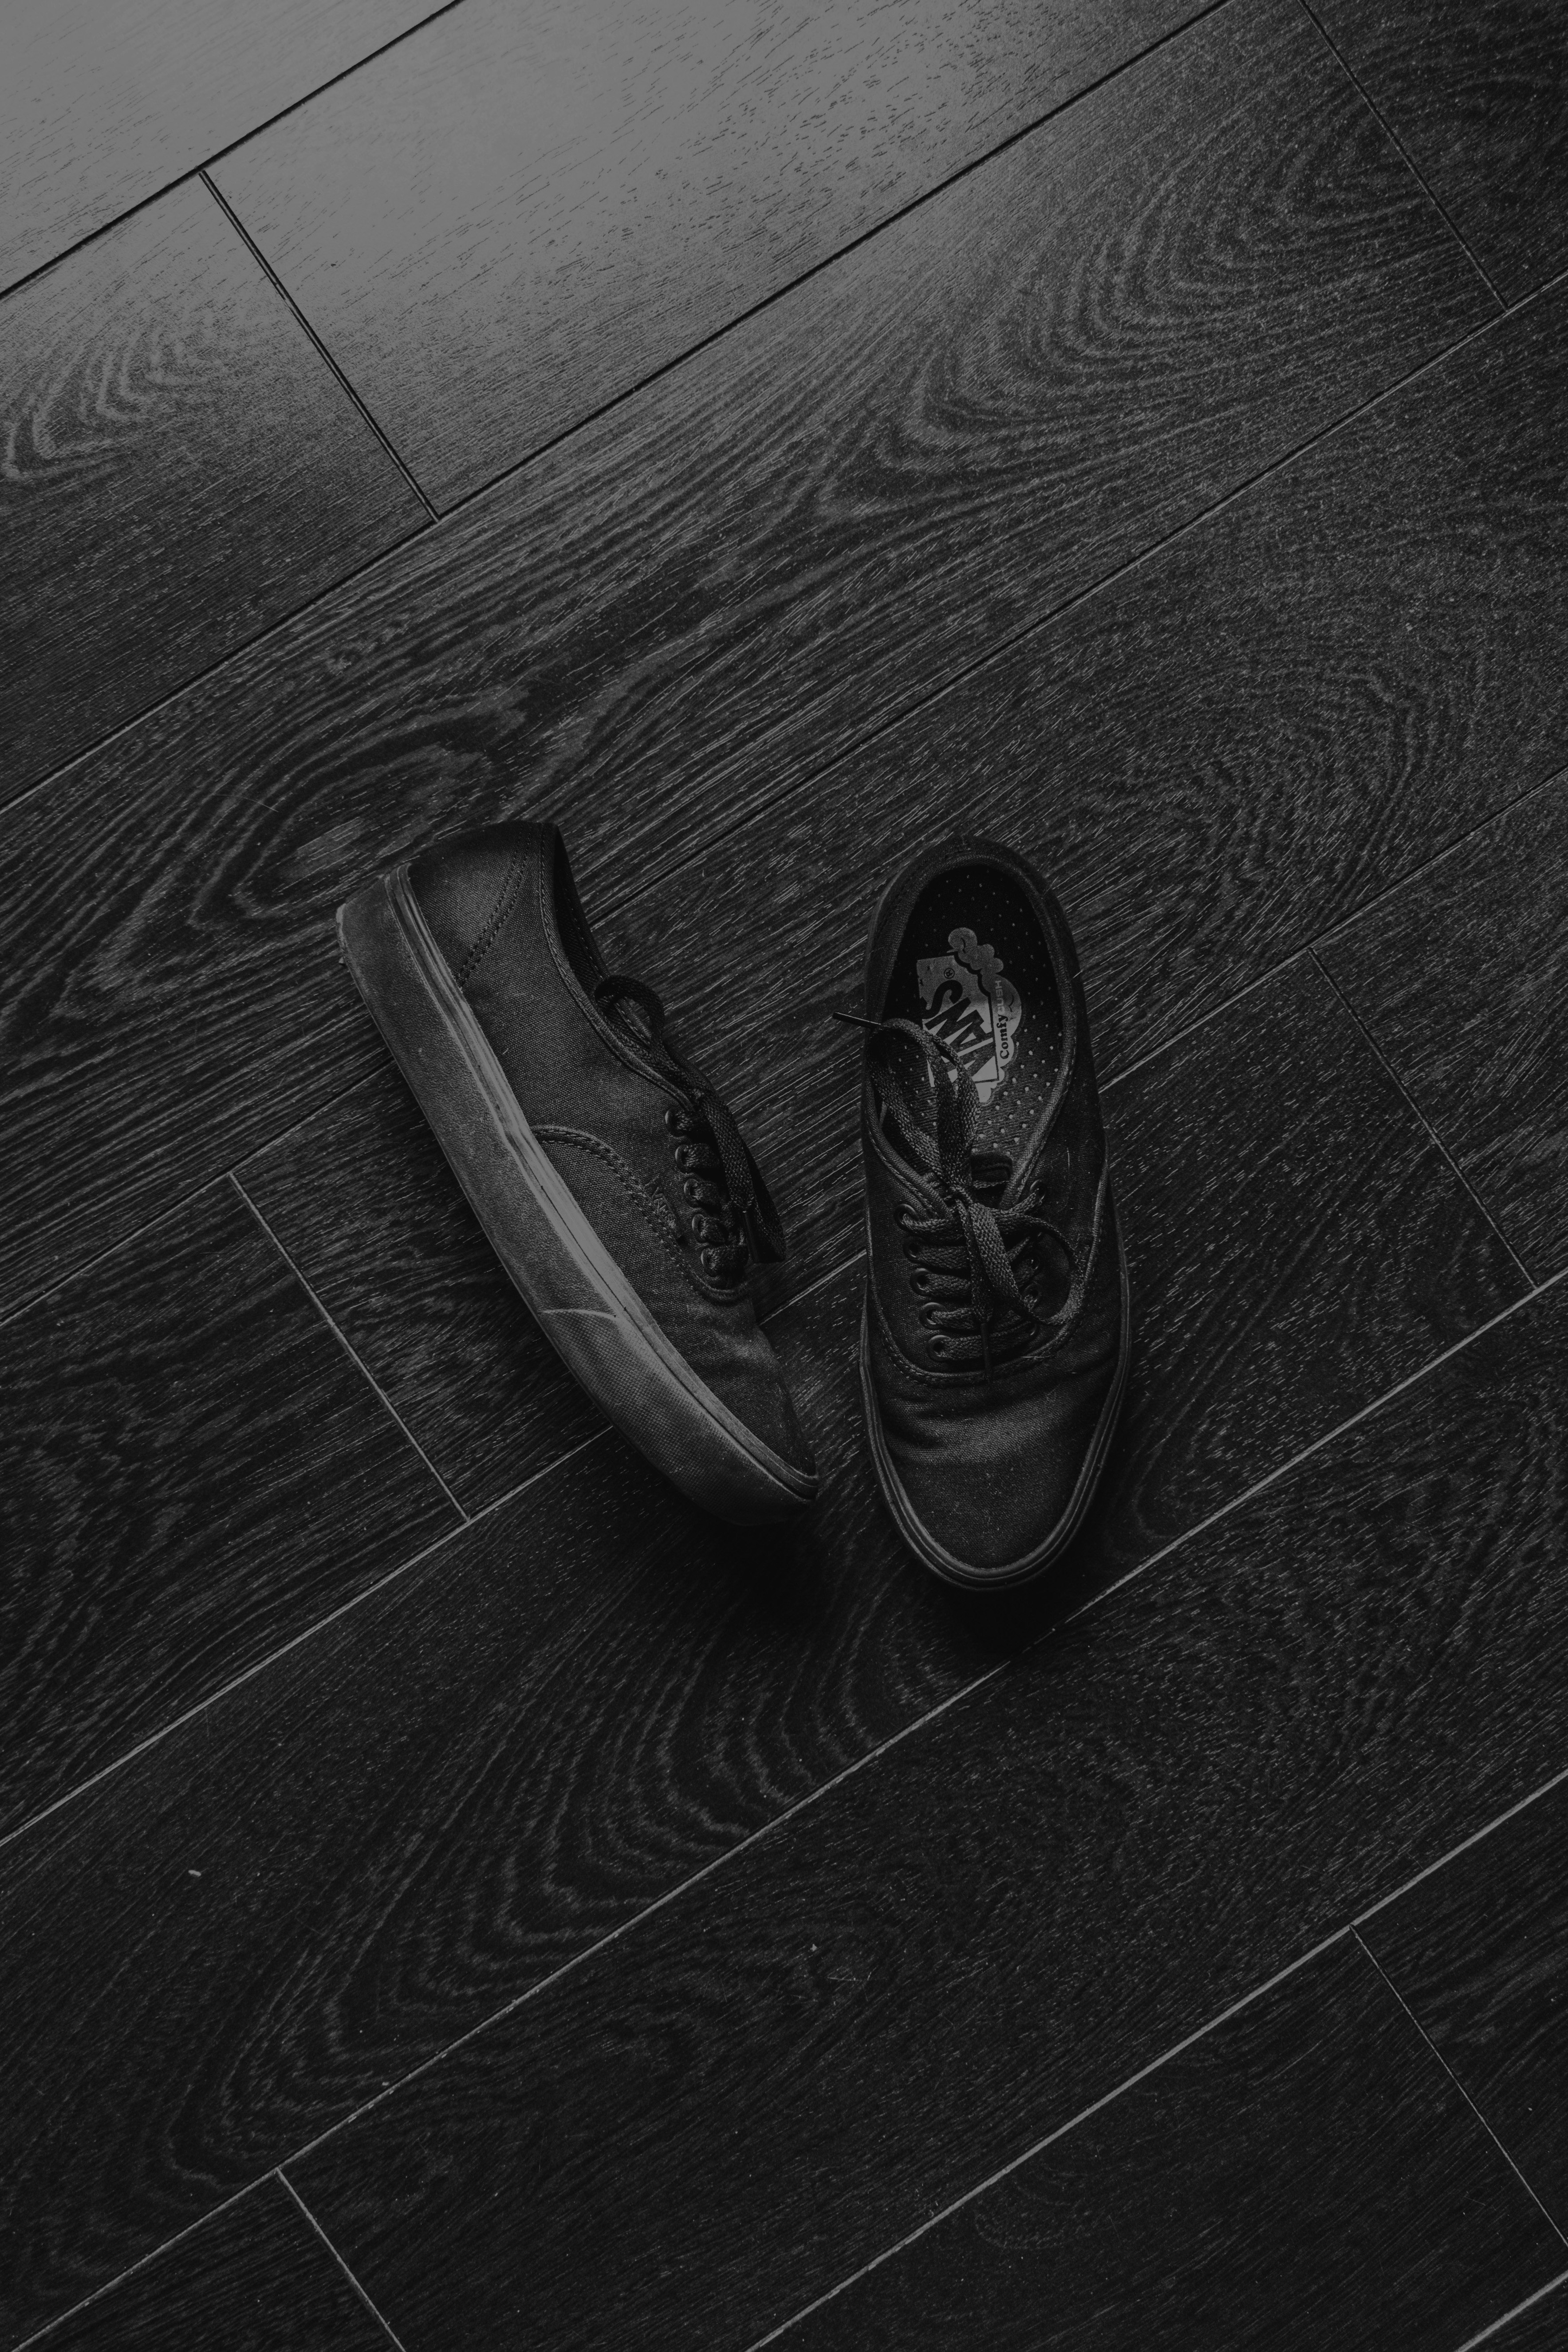 black leather shoes on black wooden floor